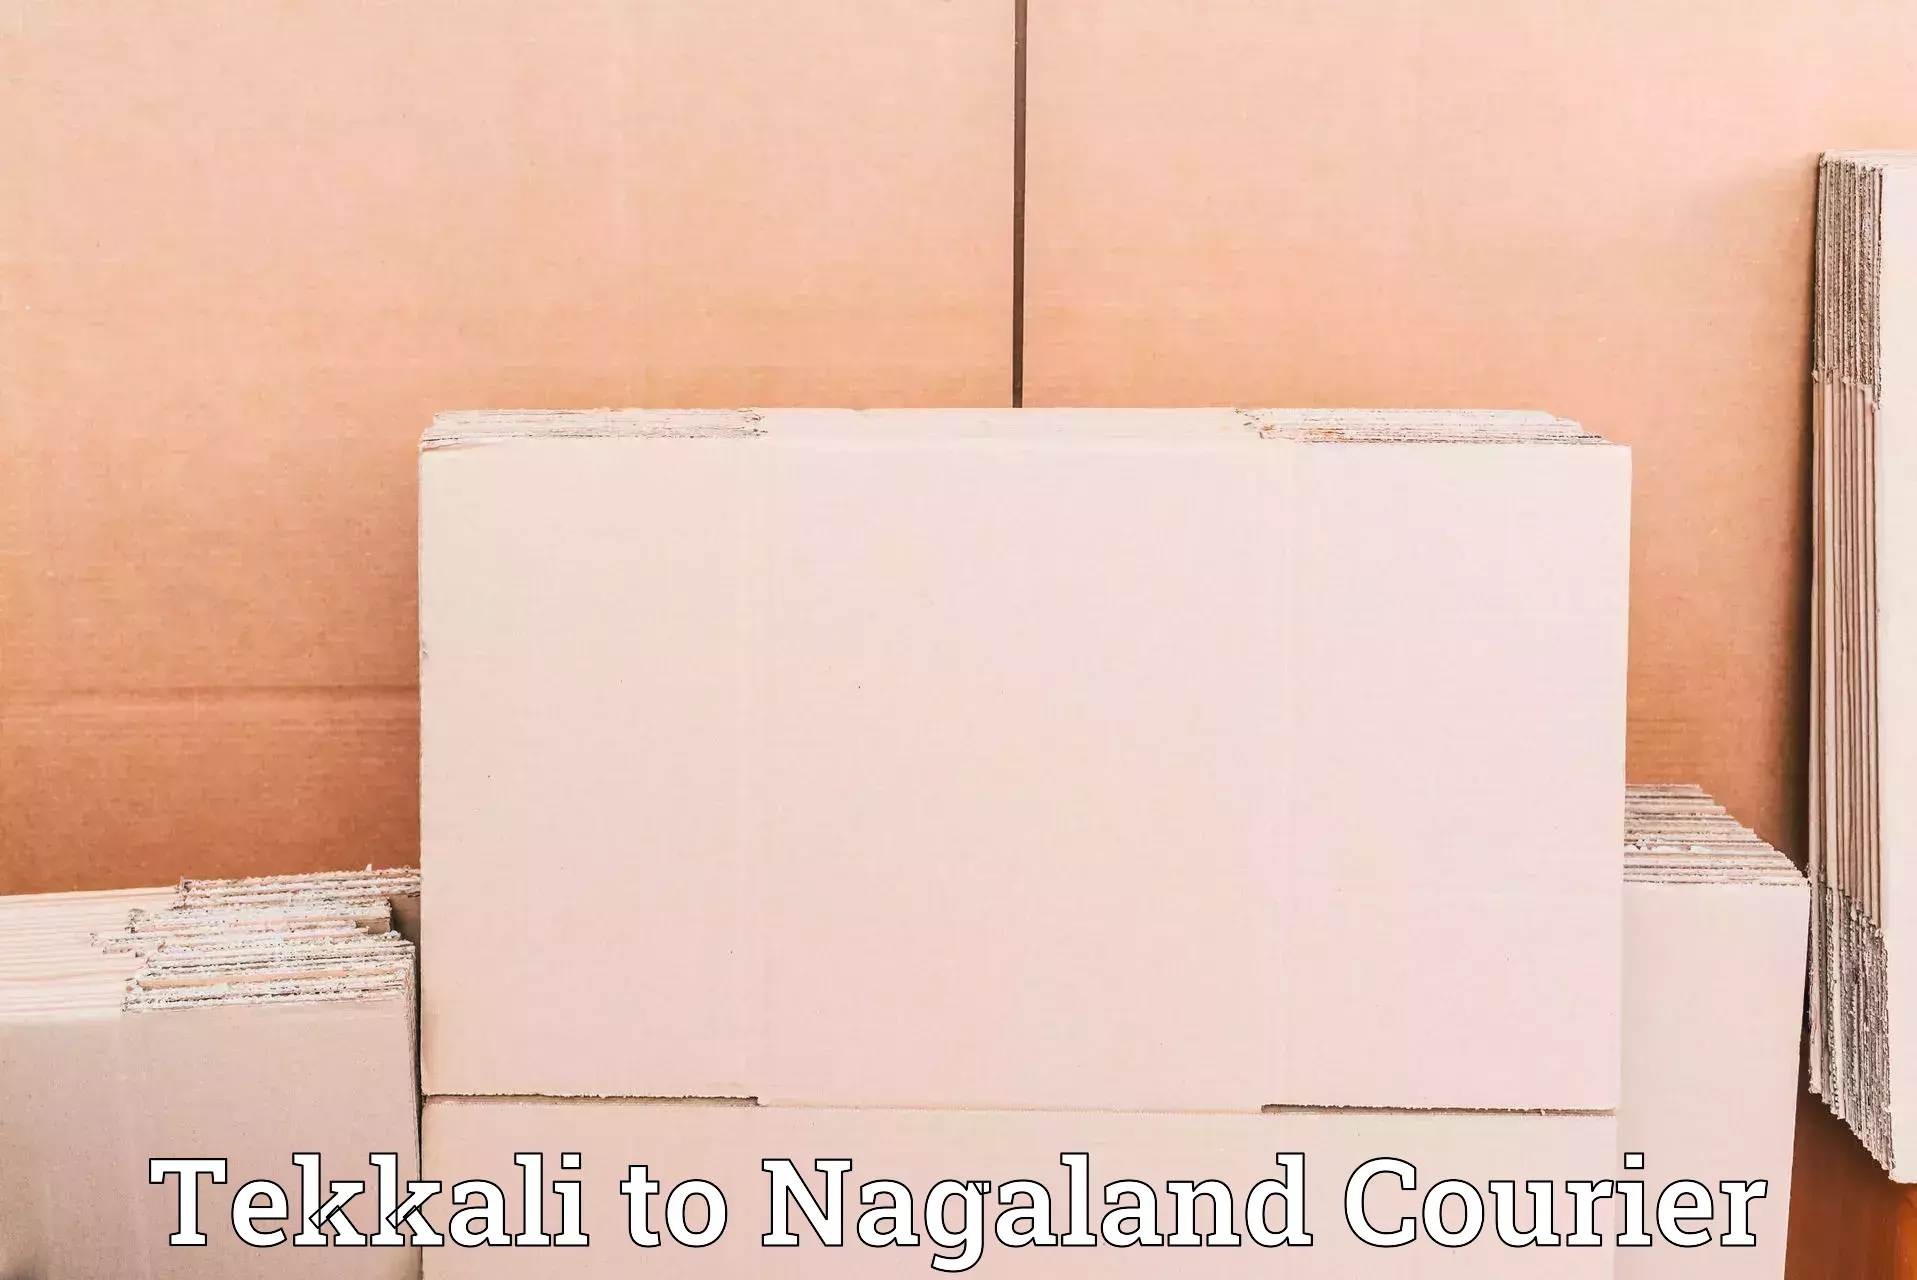 Customer-focused courier Tekkali to Nagaland